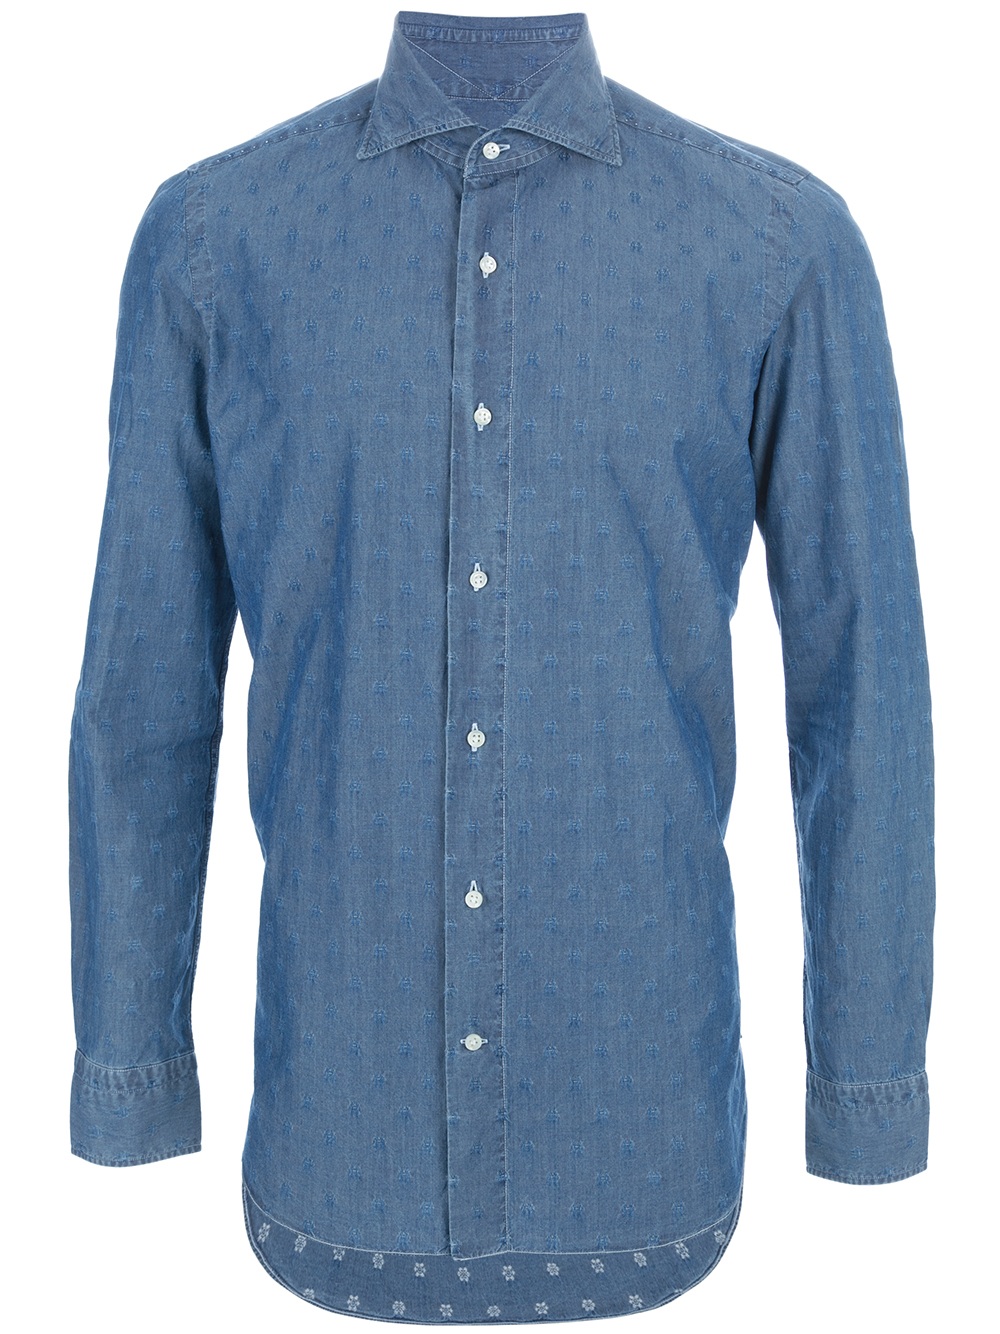 Vincenzo Di Ruggiero Stitch Detail Shirt in Blue for Men - Lyst